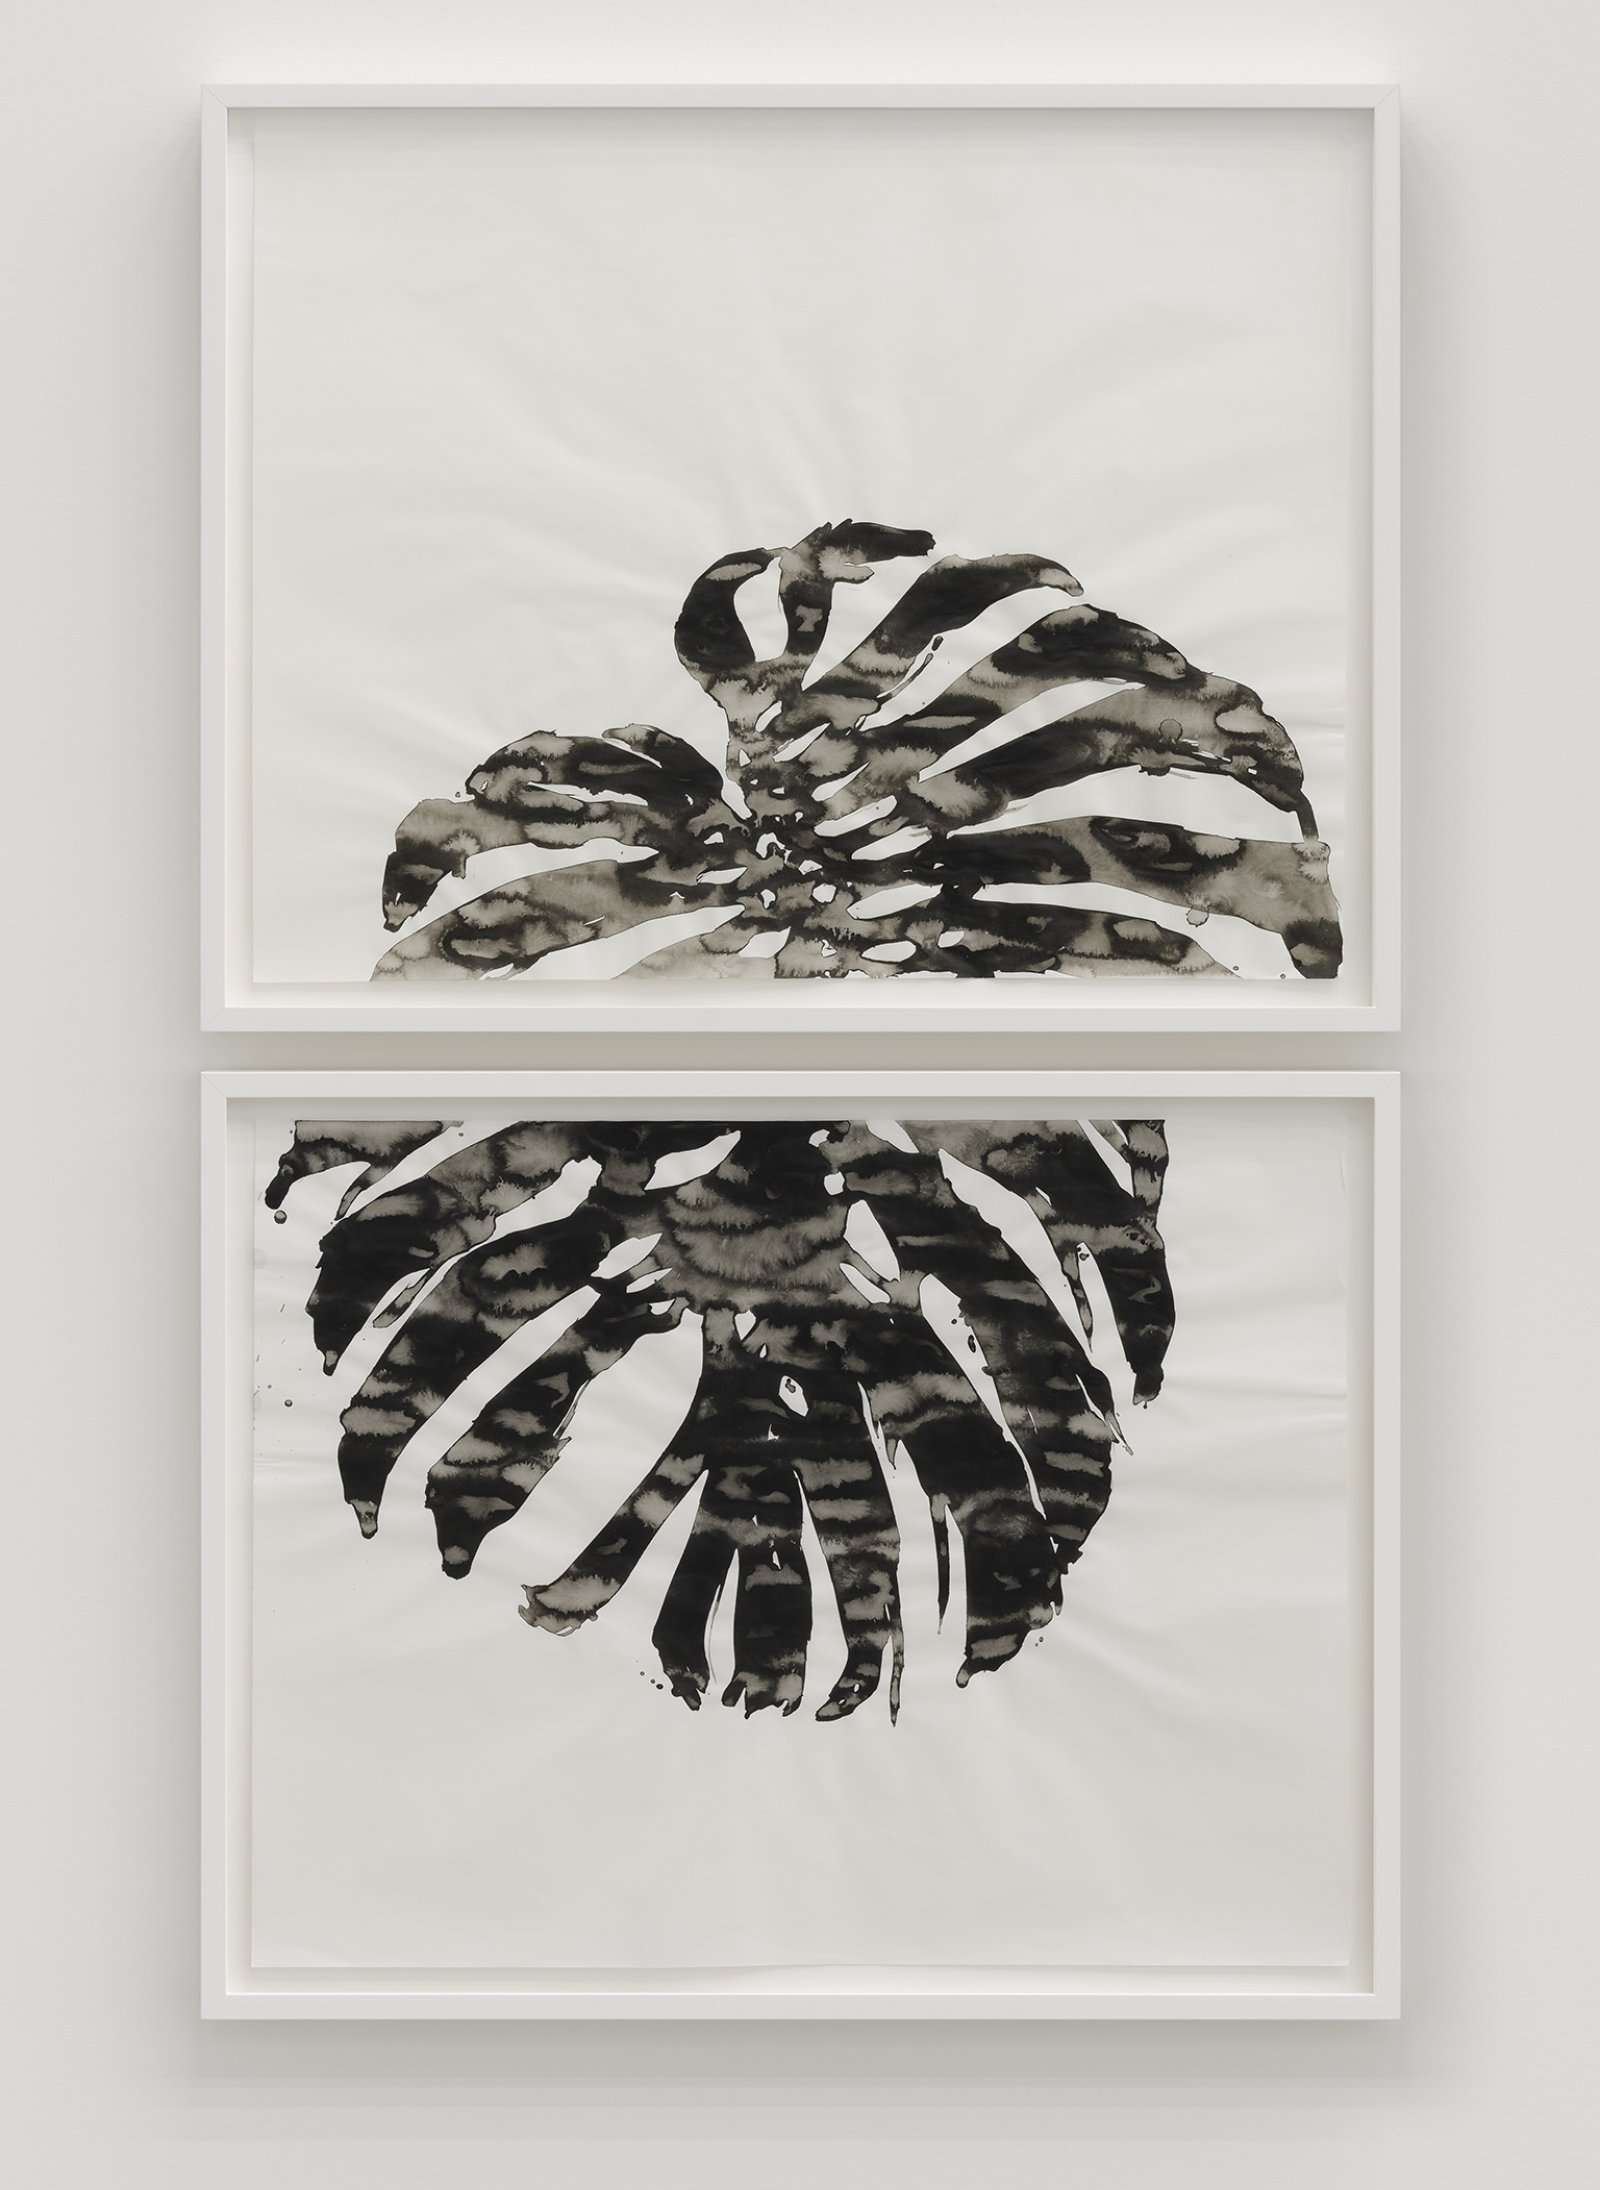 Abbas Akhavan, Monstera deliciosa (studio), 2017, ink on paper, diptych, each 22 x 28 in. (56 x 71 cm) by Abbas Akhavan